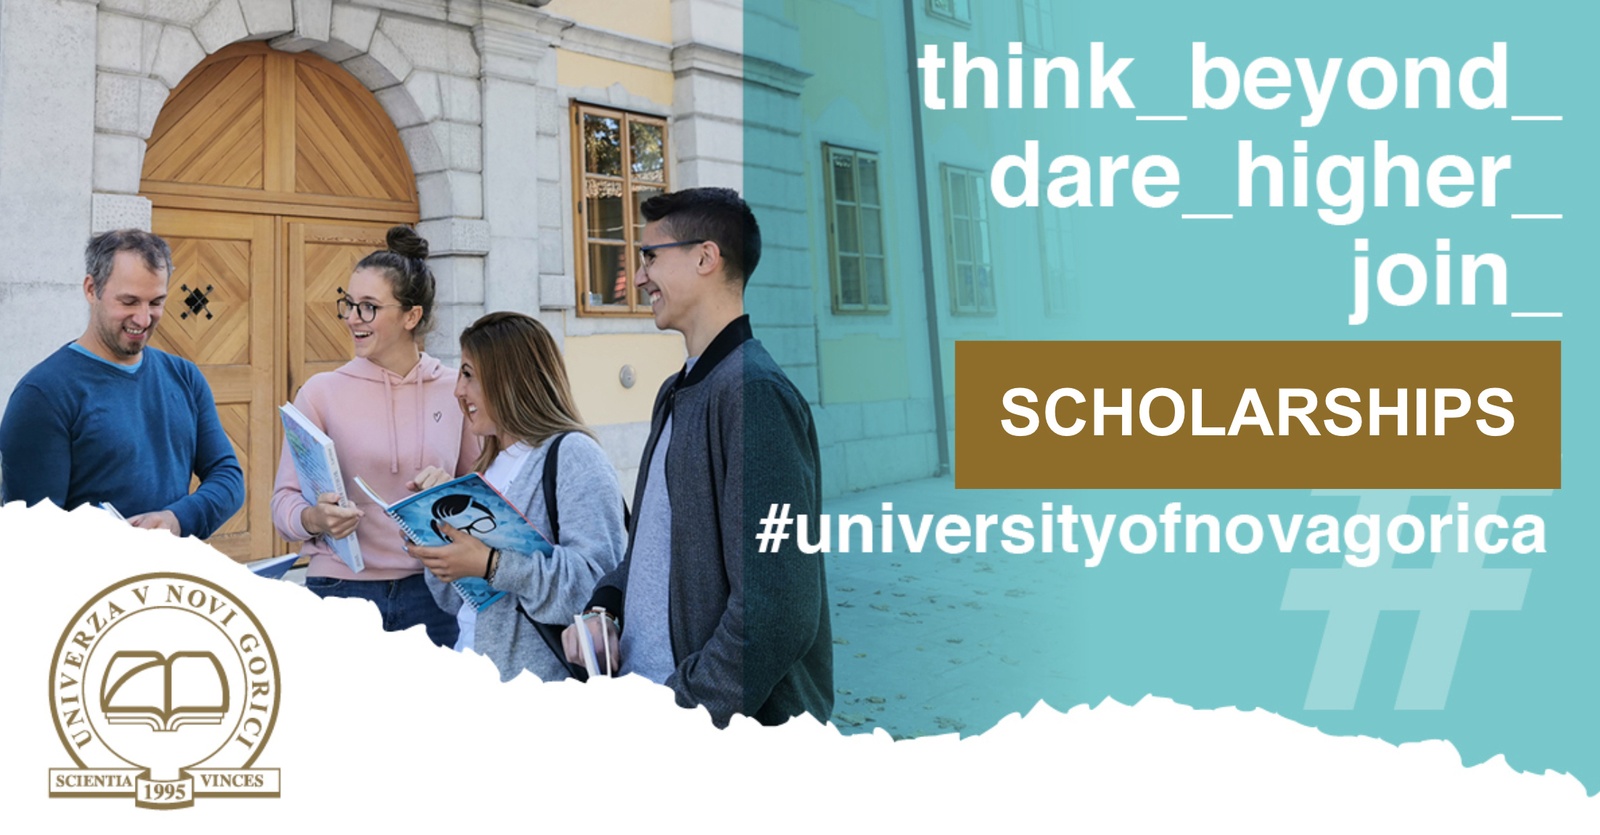 Scholarships at the University of Nova Gorica